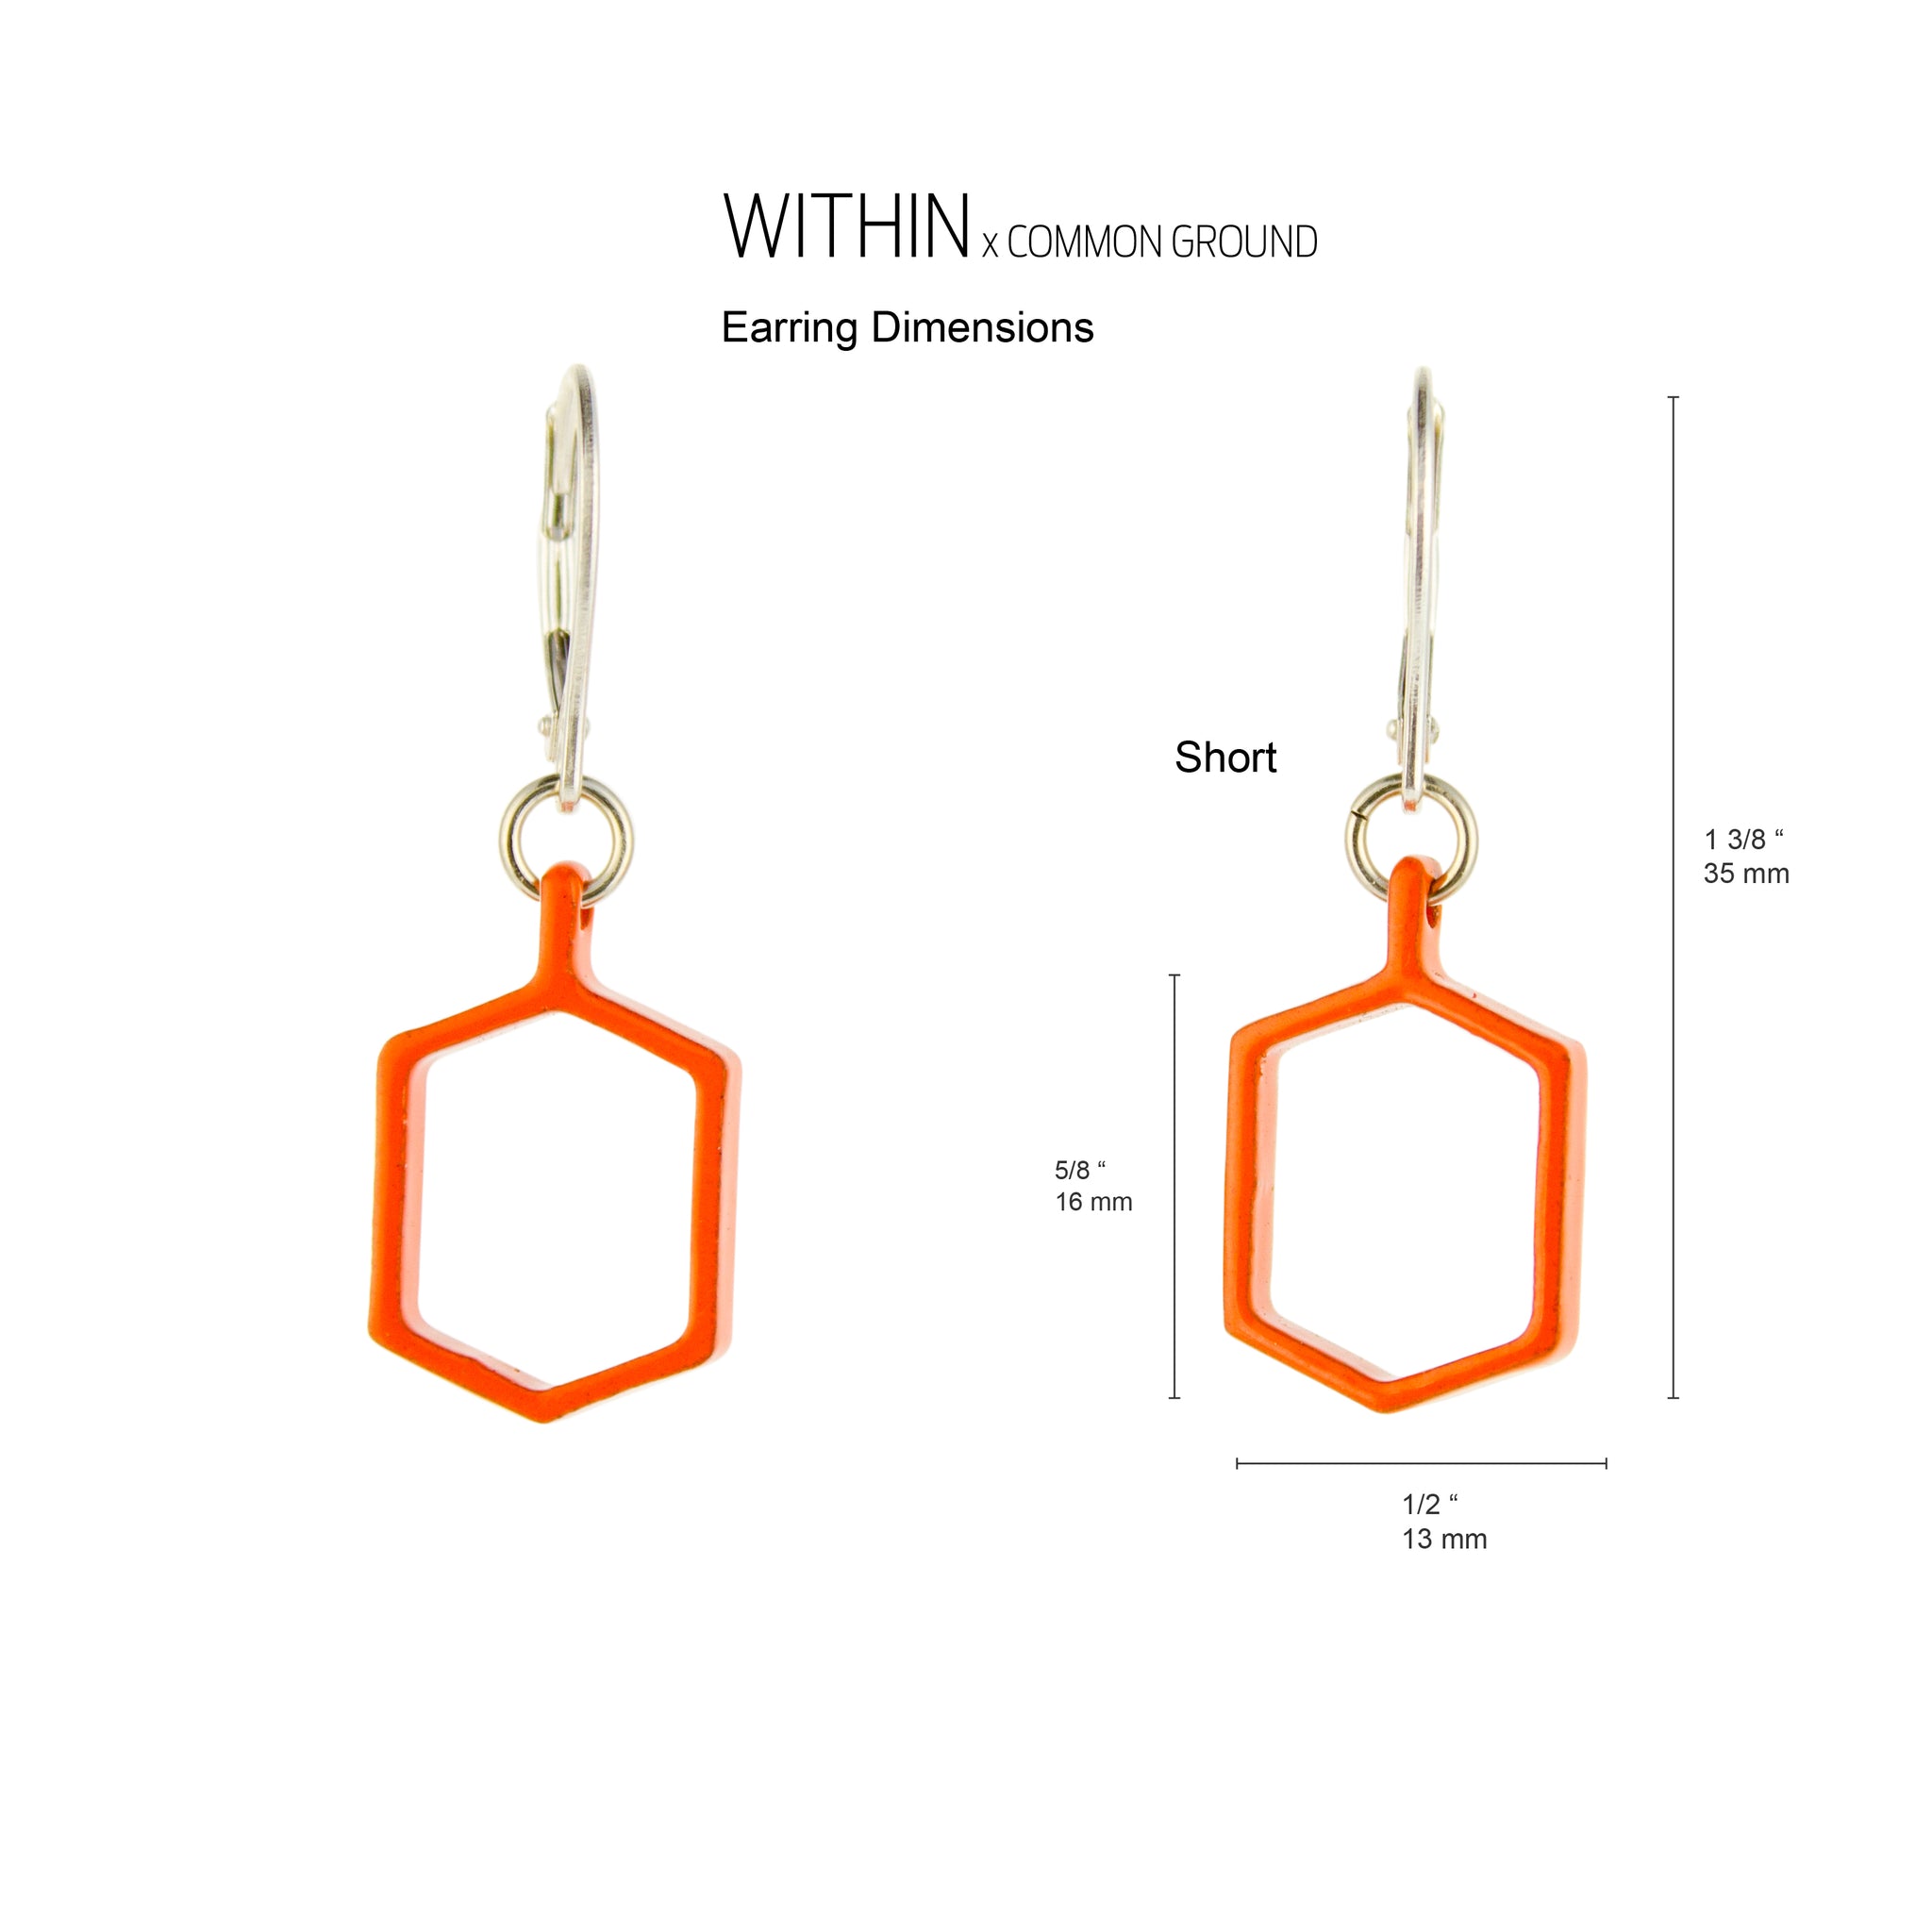 Vibrant_Orange - WITHIN x COMMON GROUND Earring Dim View